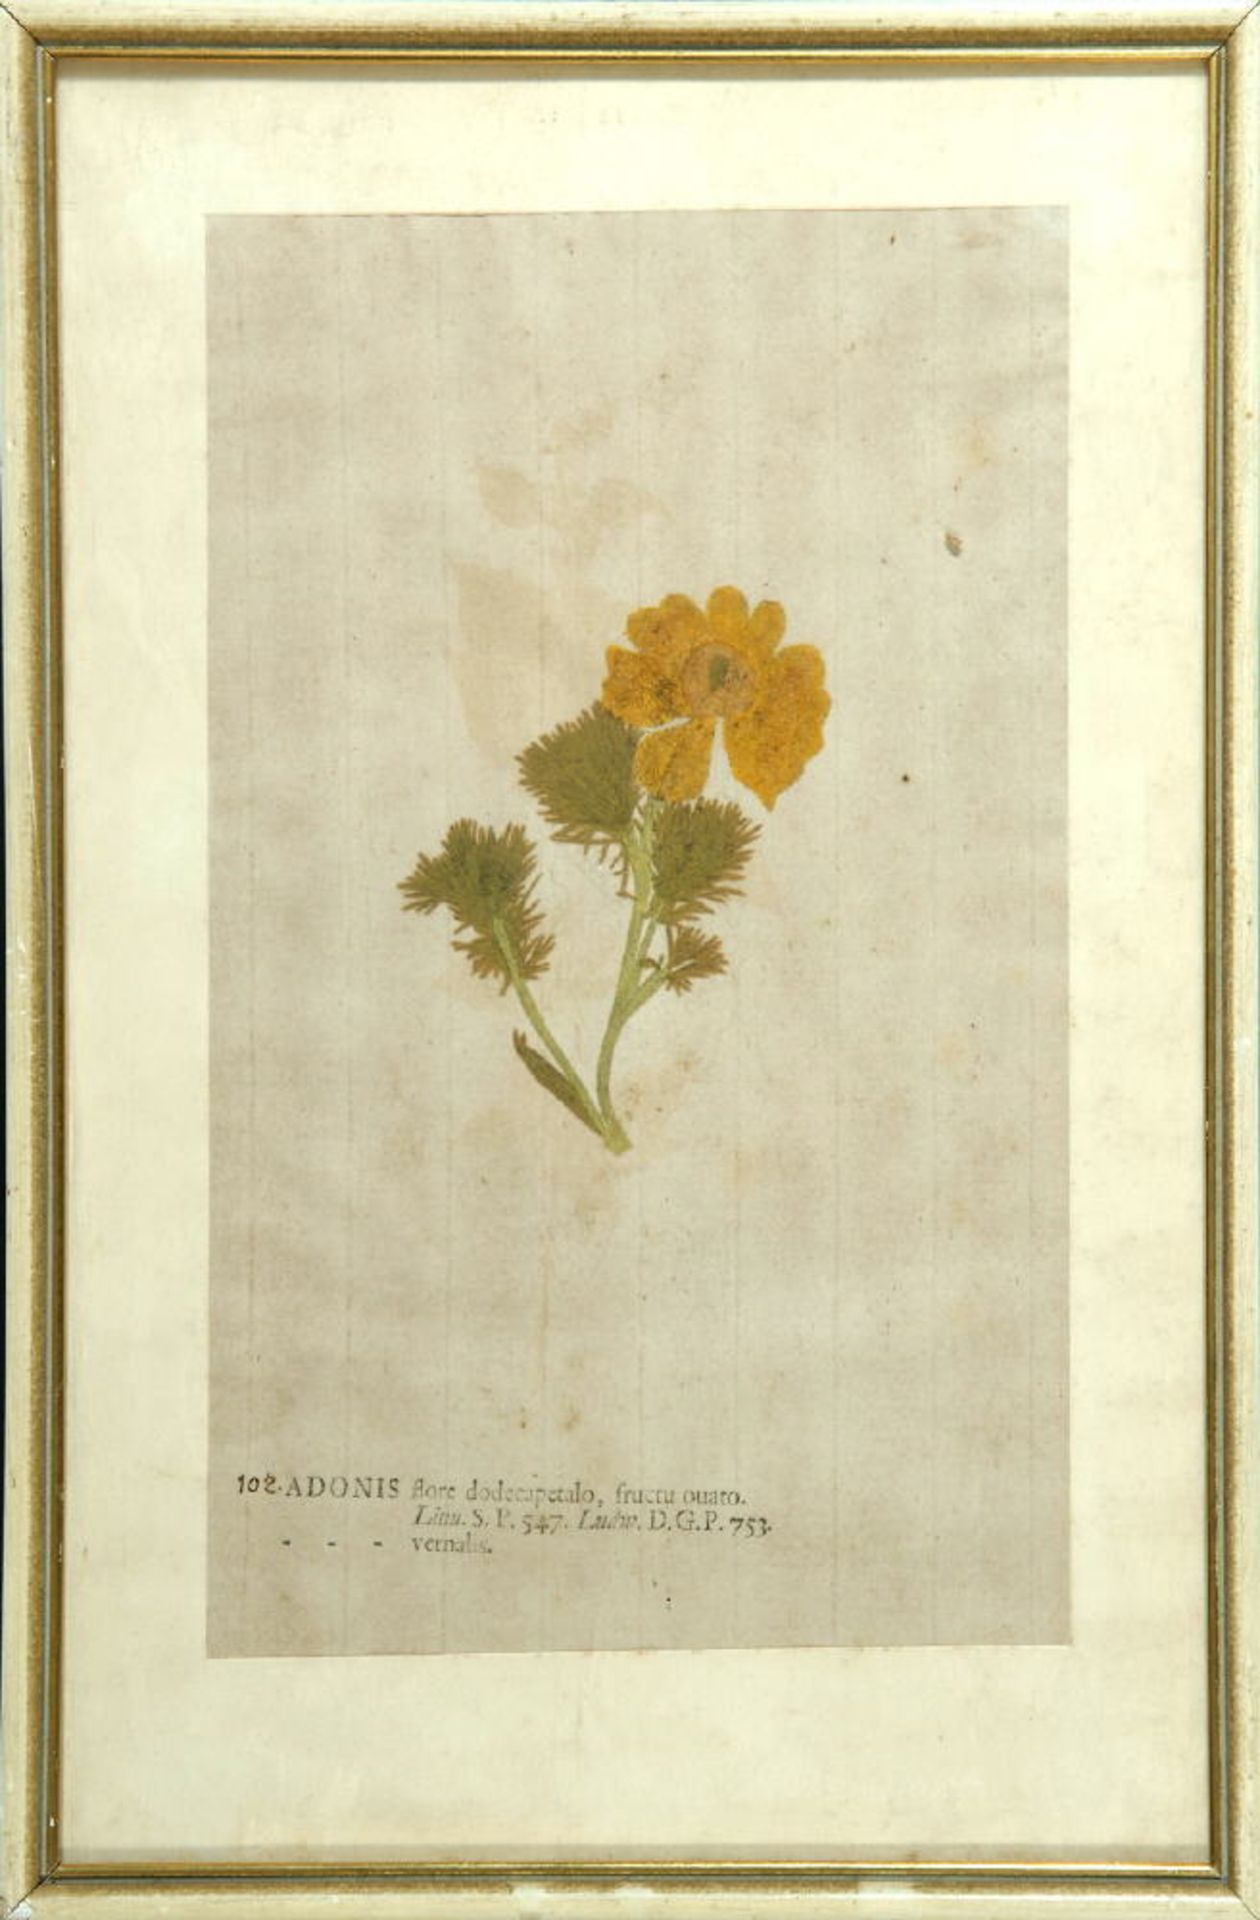 Radierung, um 1700handcolor., 13 x 10 cm, betit. " Adonis flore dodecapetalo, fructu ovato ",